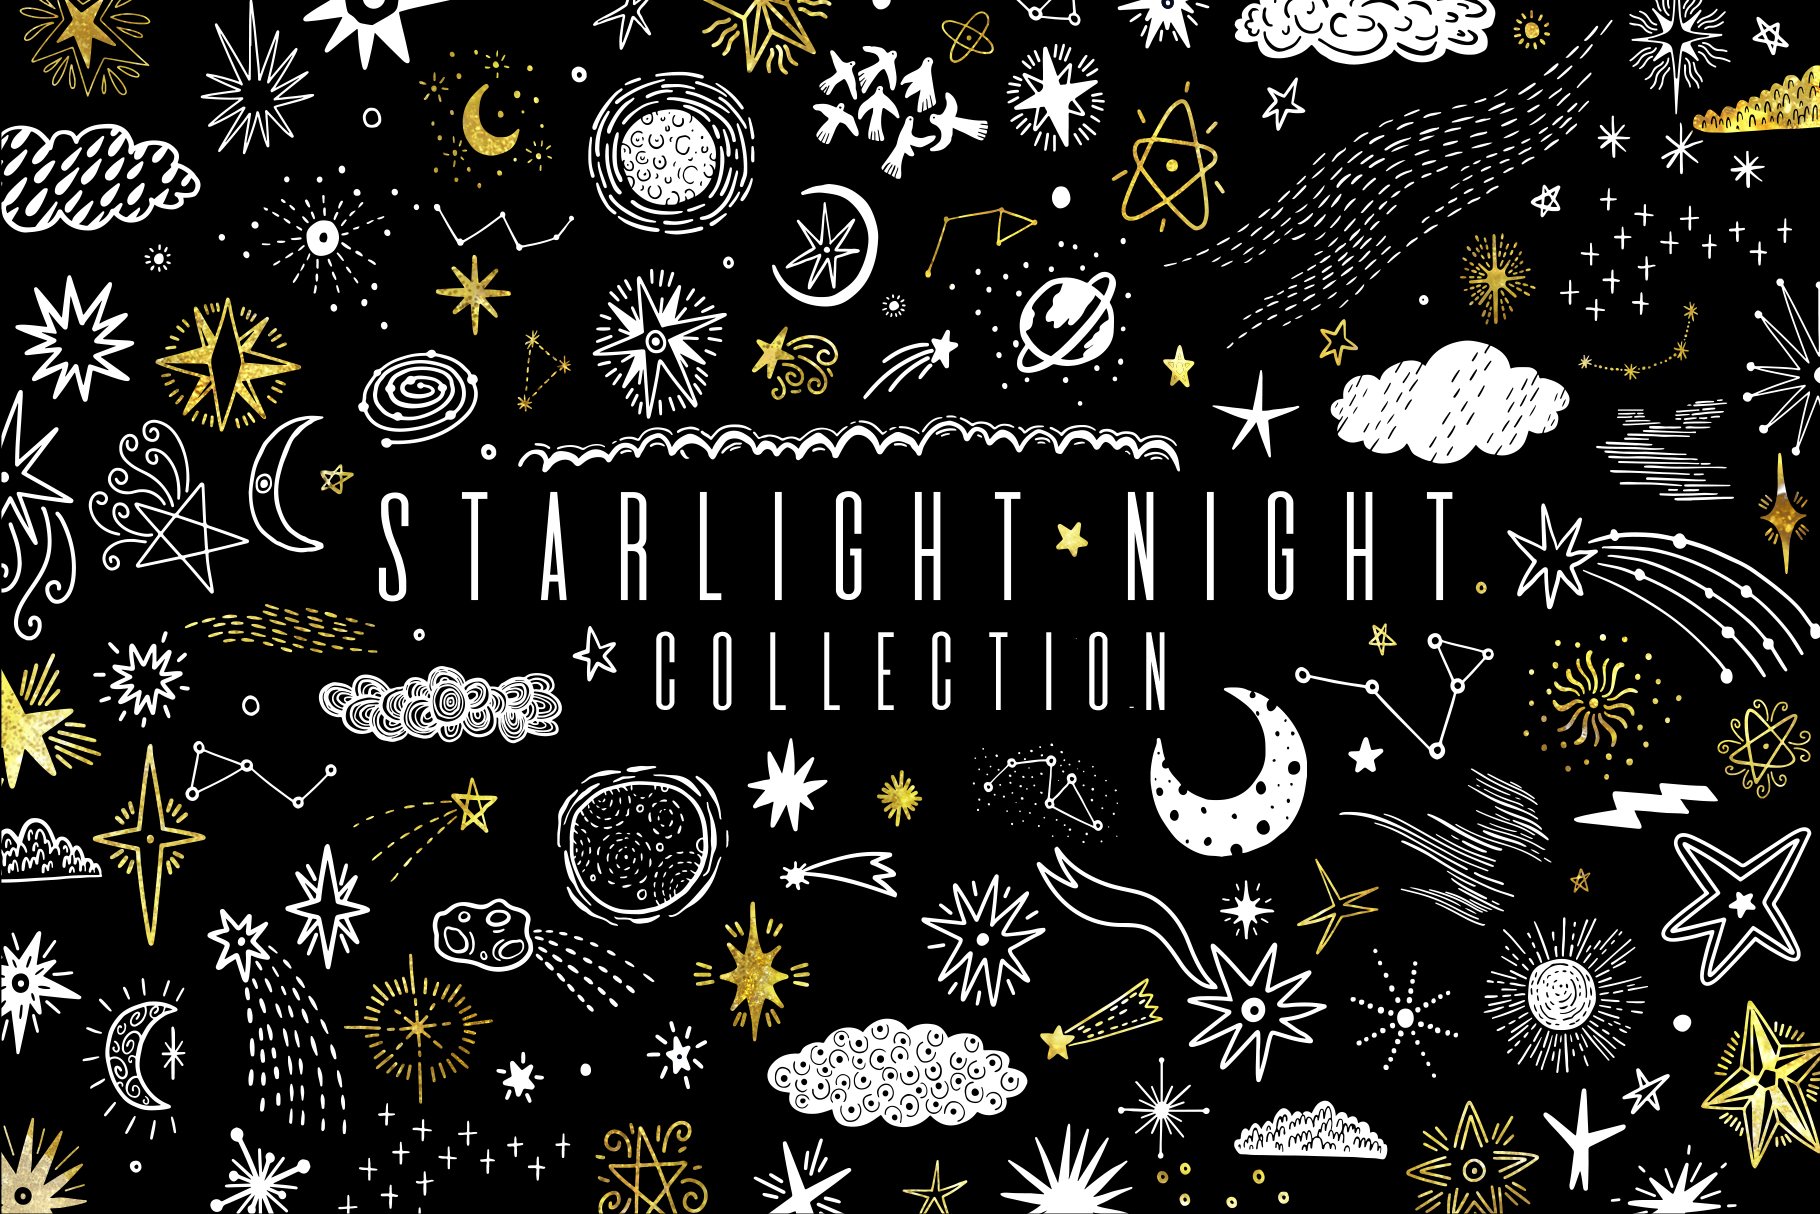 Starlight Night UpdatedV.2.0 cover image.